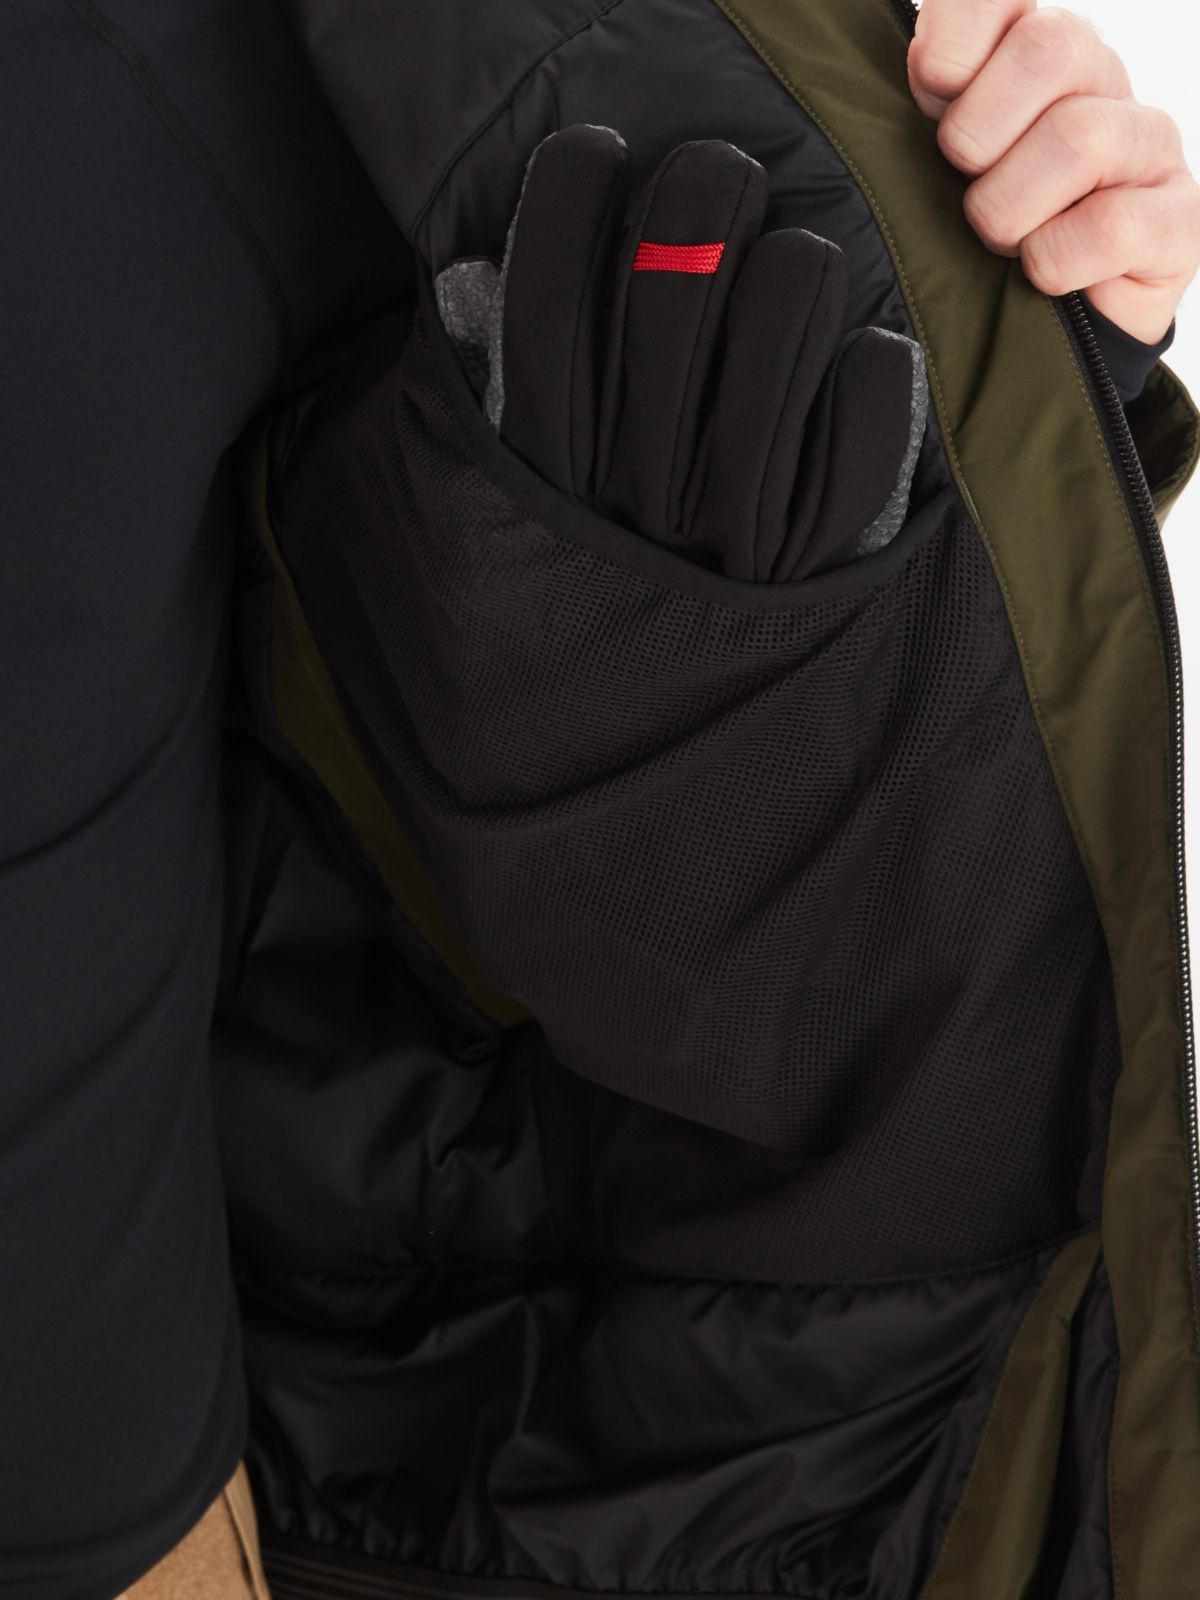 close up of a glove inside the pocket of a mens parka jacket